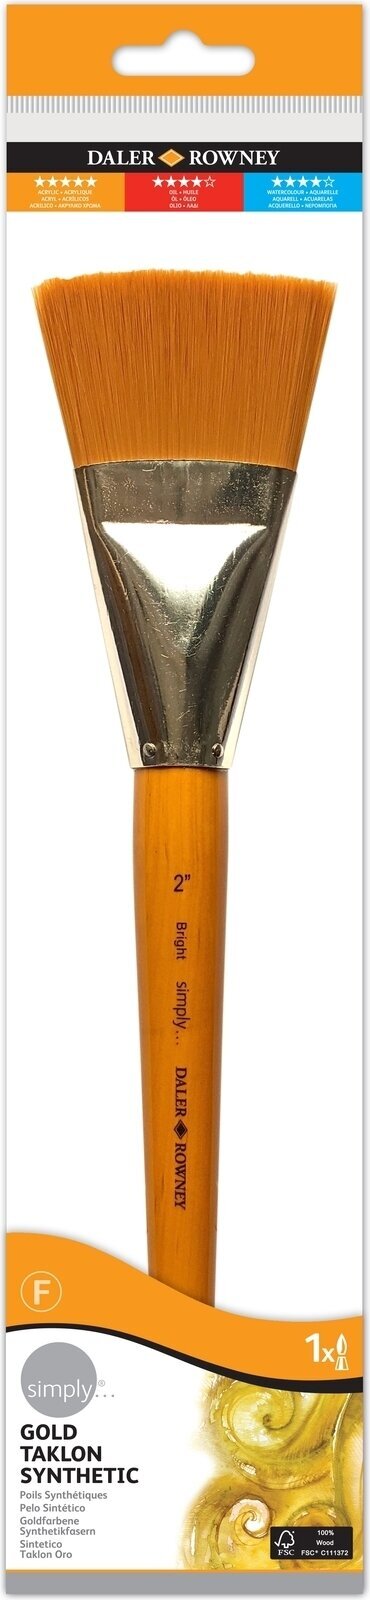 Pensel Daler Rowney Simply Acrylic Brush Gold Taklon Synthetic Flad pensel 2 1 stk.